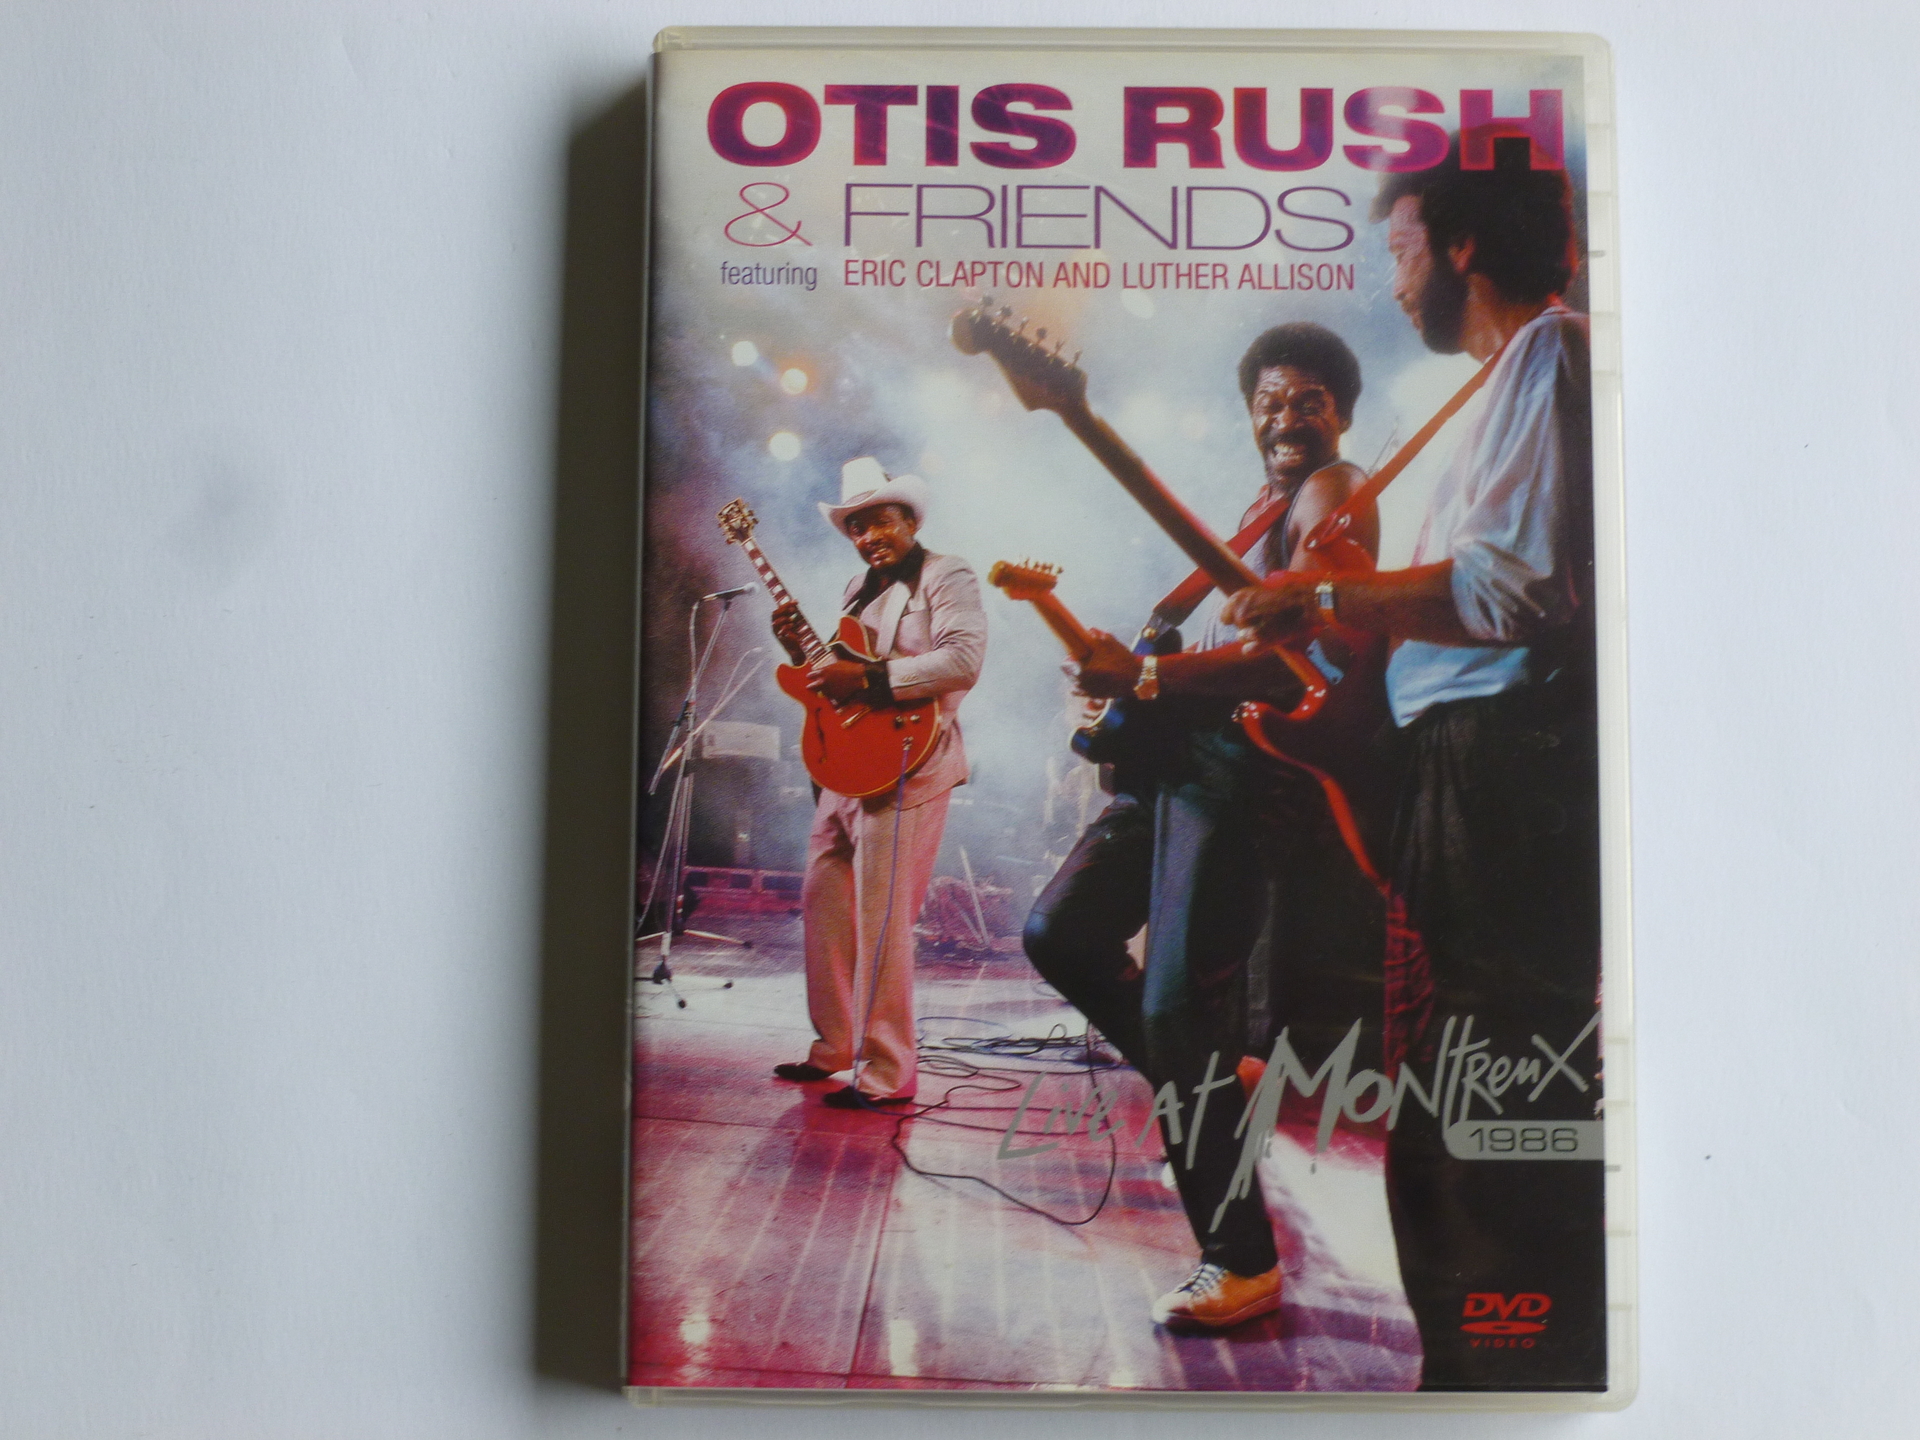 Otis Rush u0026 Friends / Live at Montreux 1986 (DVD) - Tweedehands CD